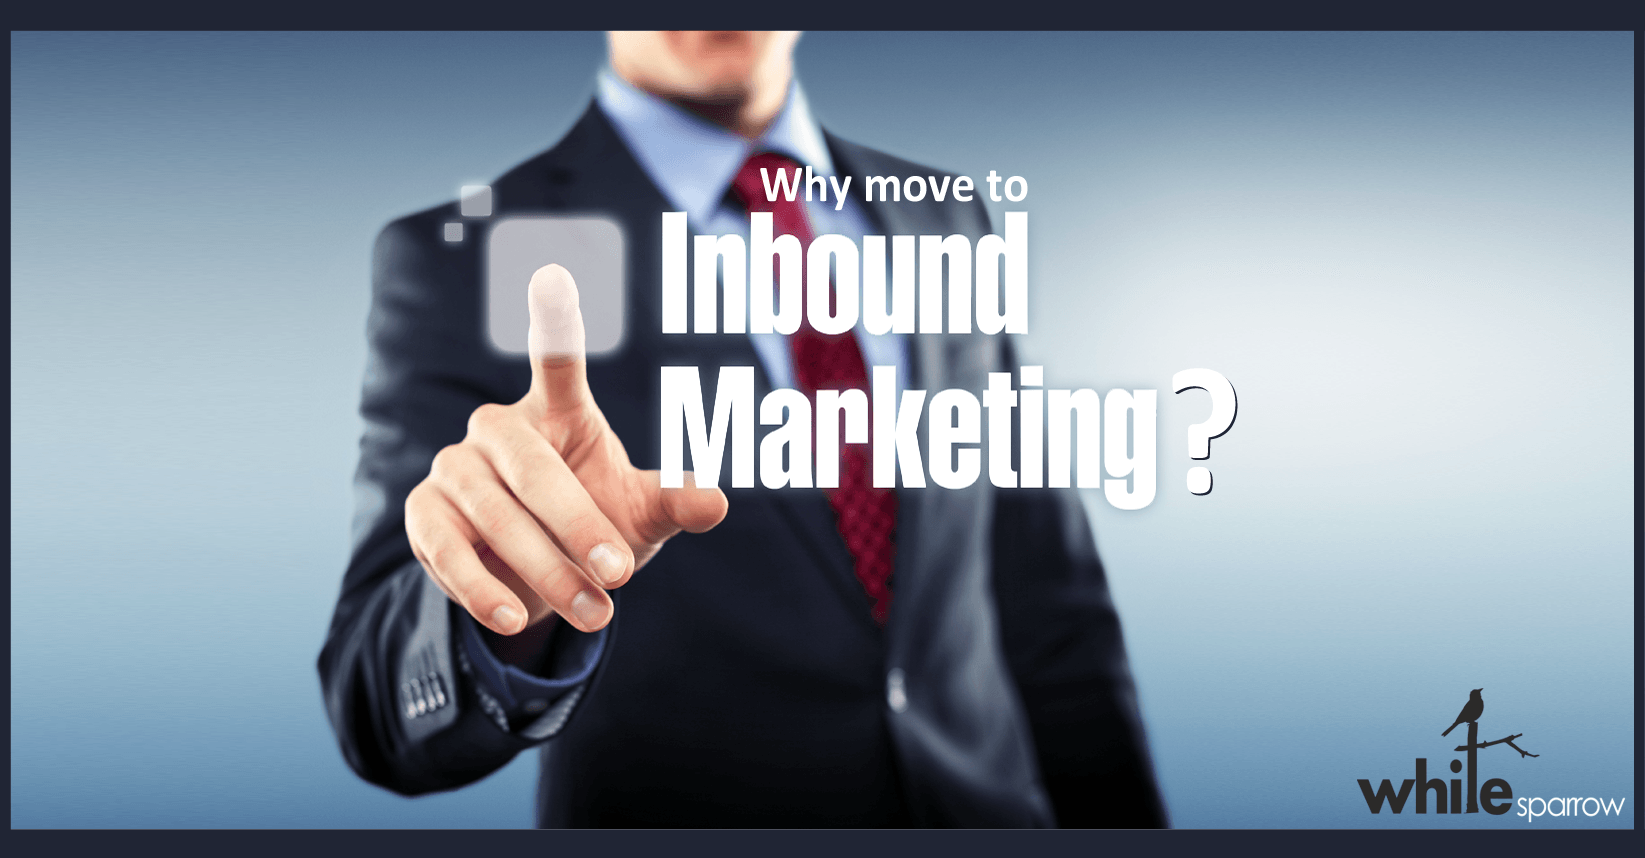 Why move to Inbound Marketing?